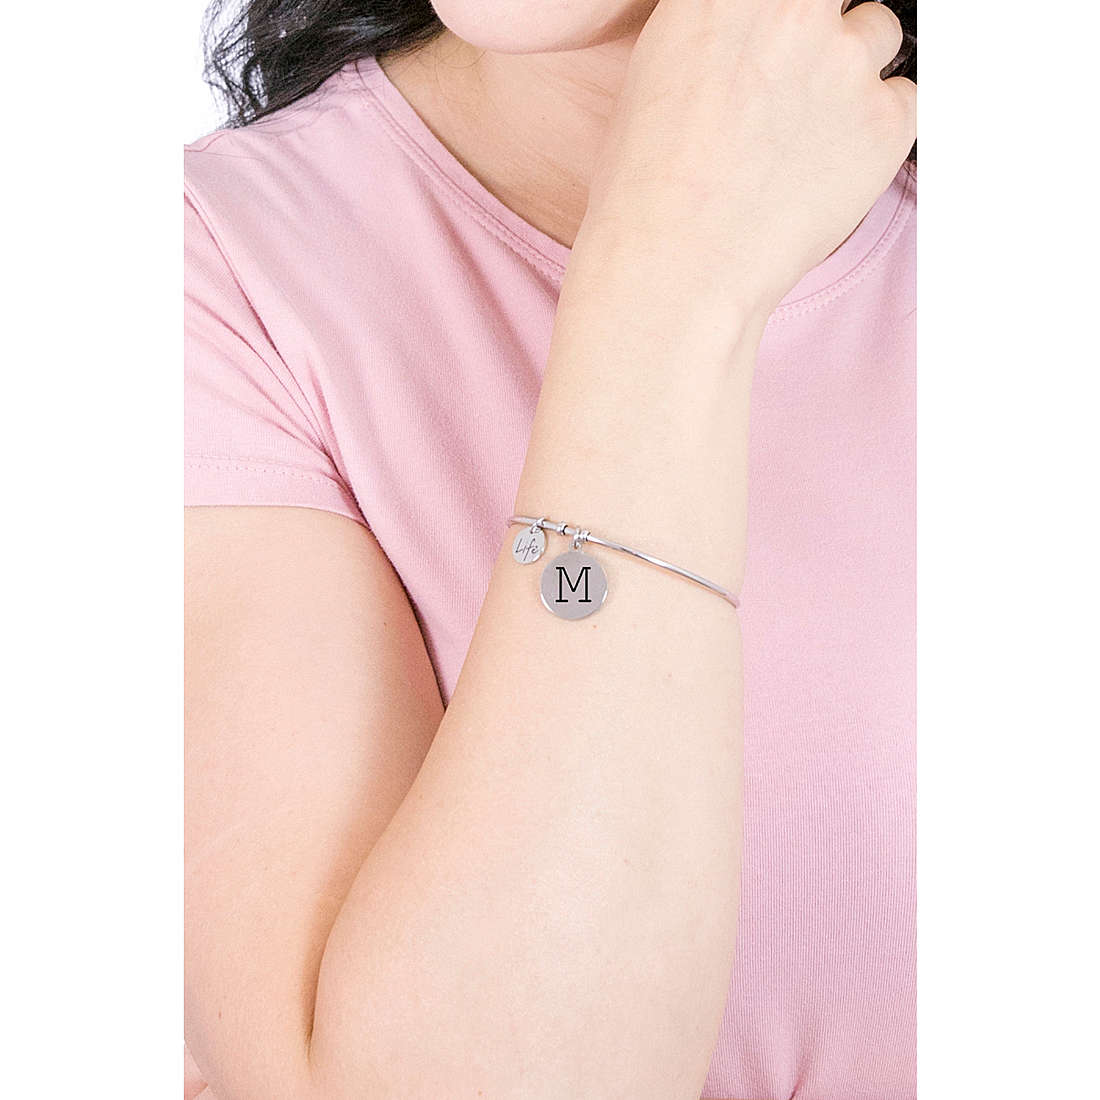 Kidult bracelets Symbols woman 231555m wearing